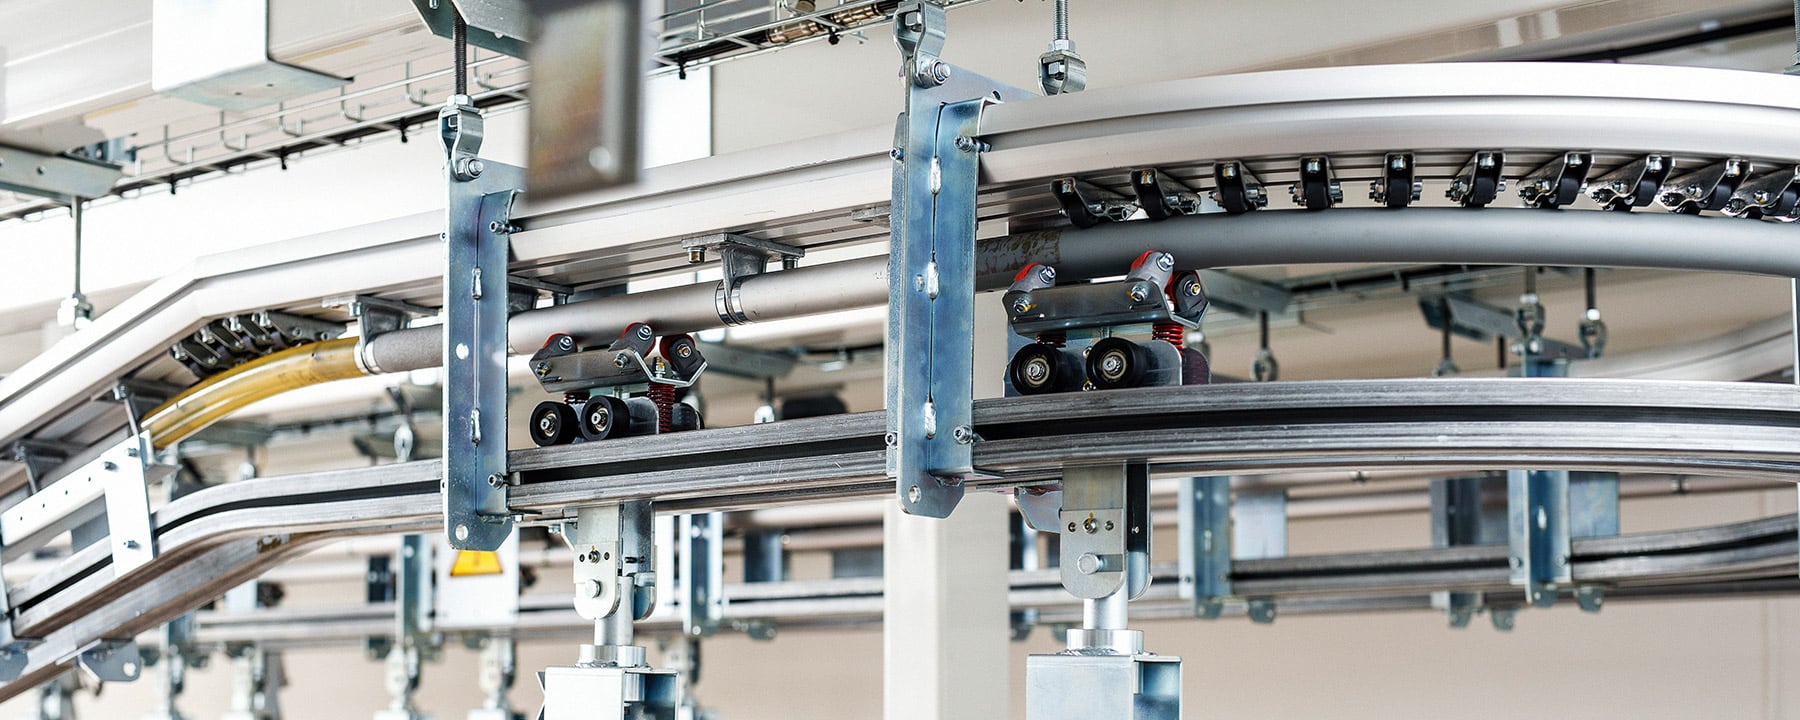 Overhead Conveyor System – OCS 500